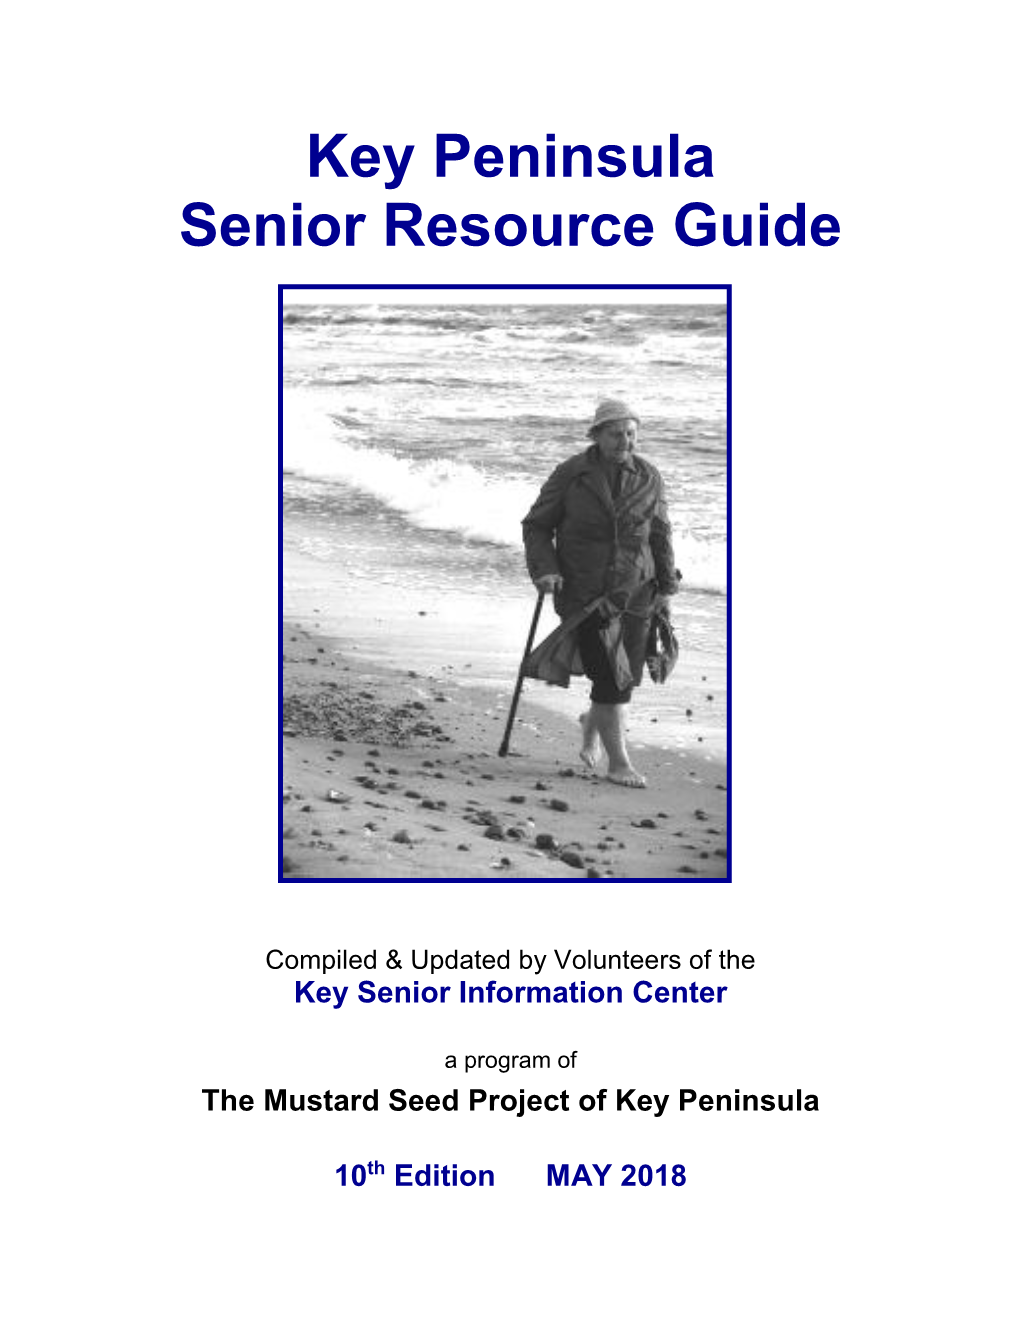 Key Peninsula Senior Resource Guide